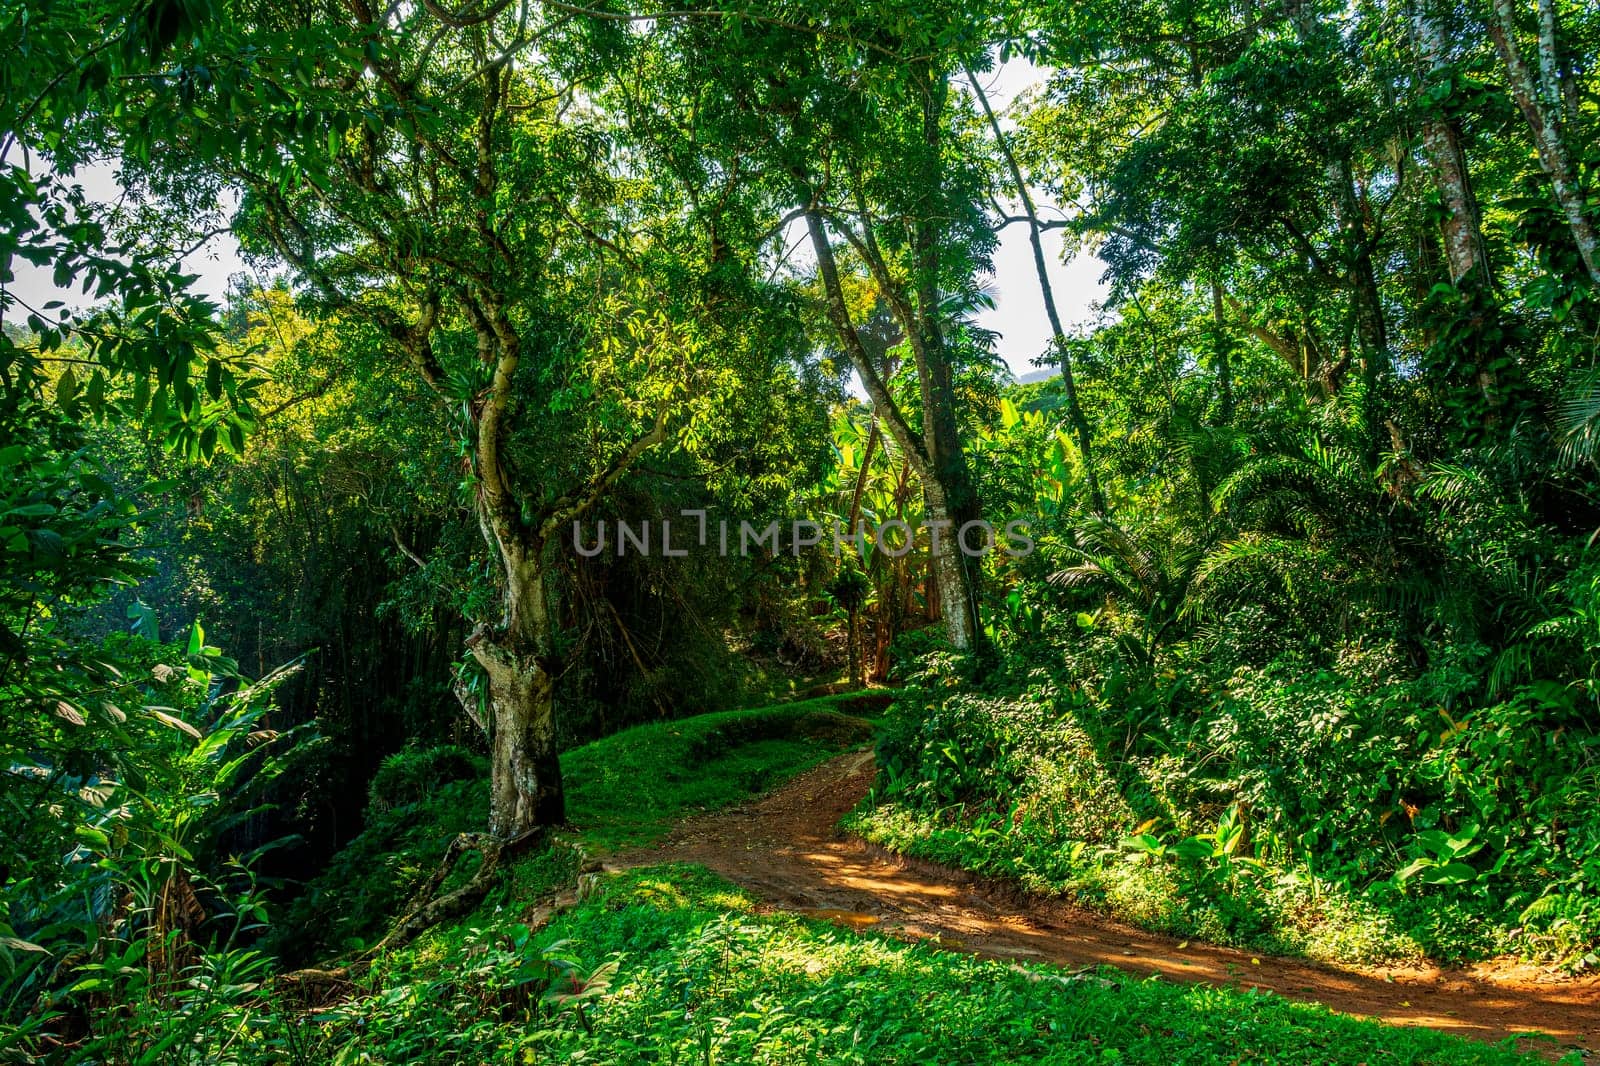 Dirt path through the rainforest on the island of Ilhabel on the coast of São Paulo